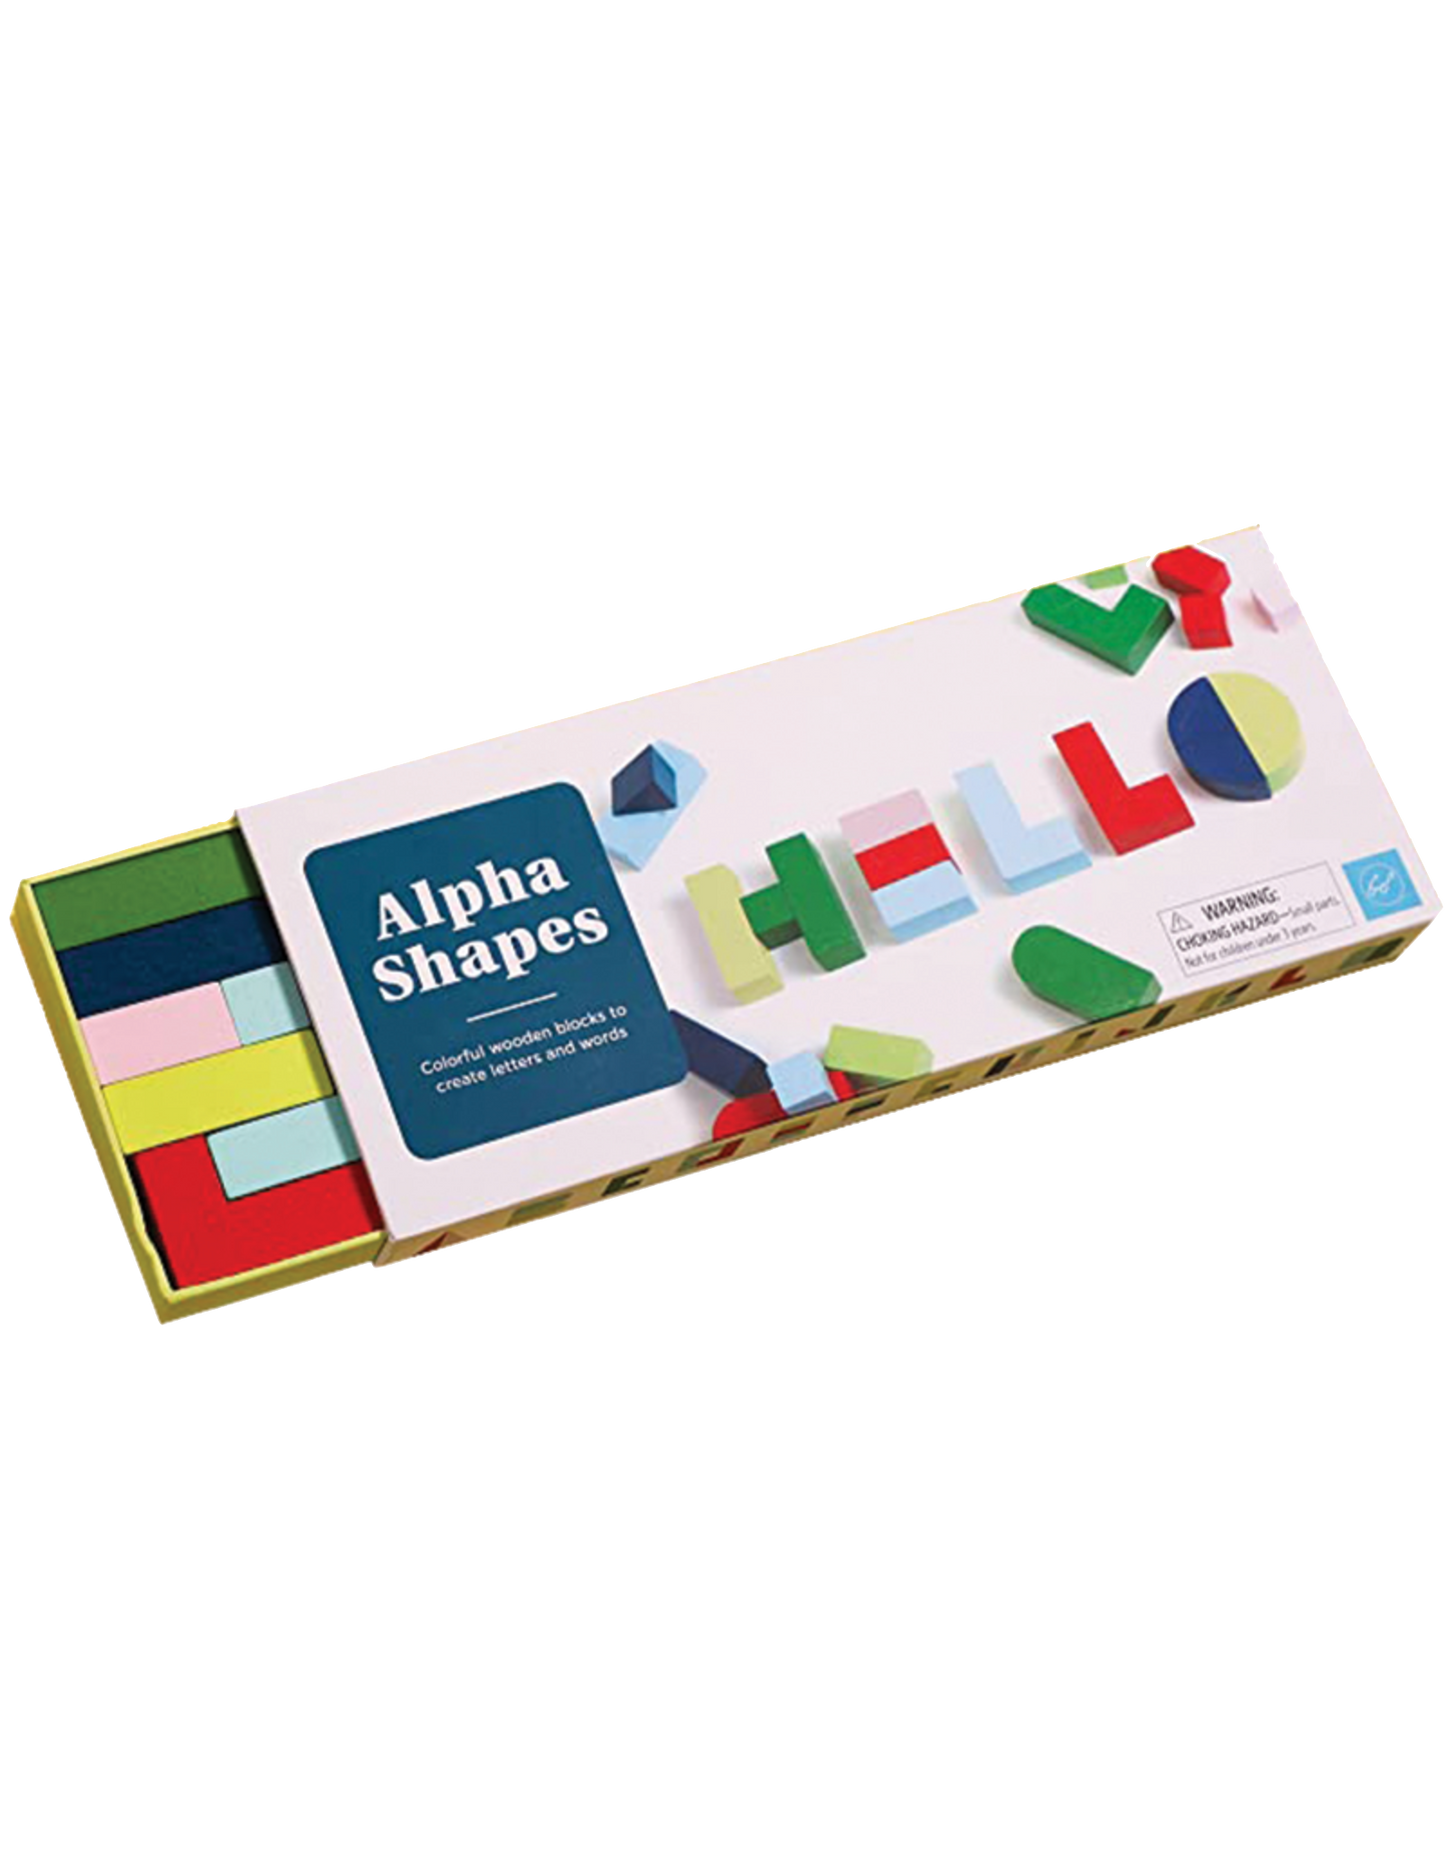 ‘Alpha Shapes’ wooden blocks